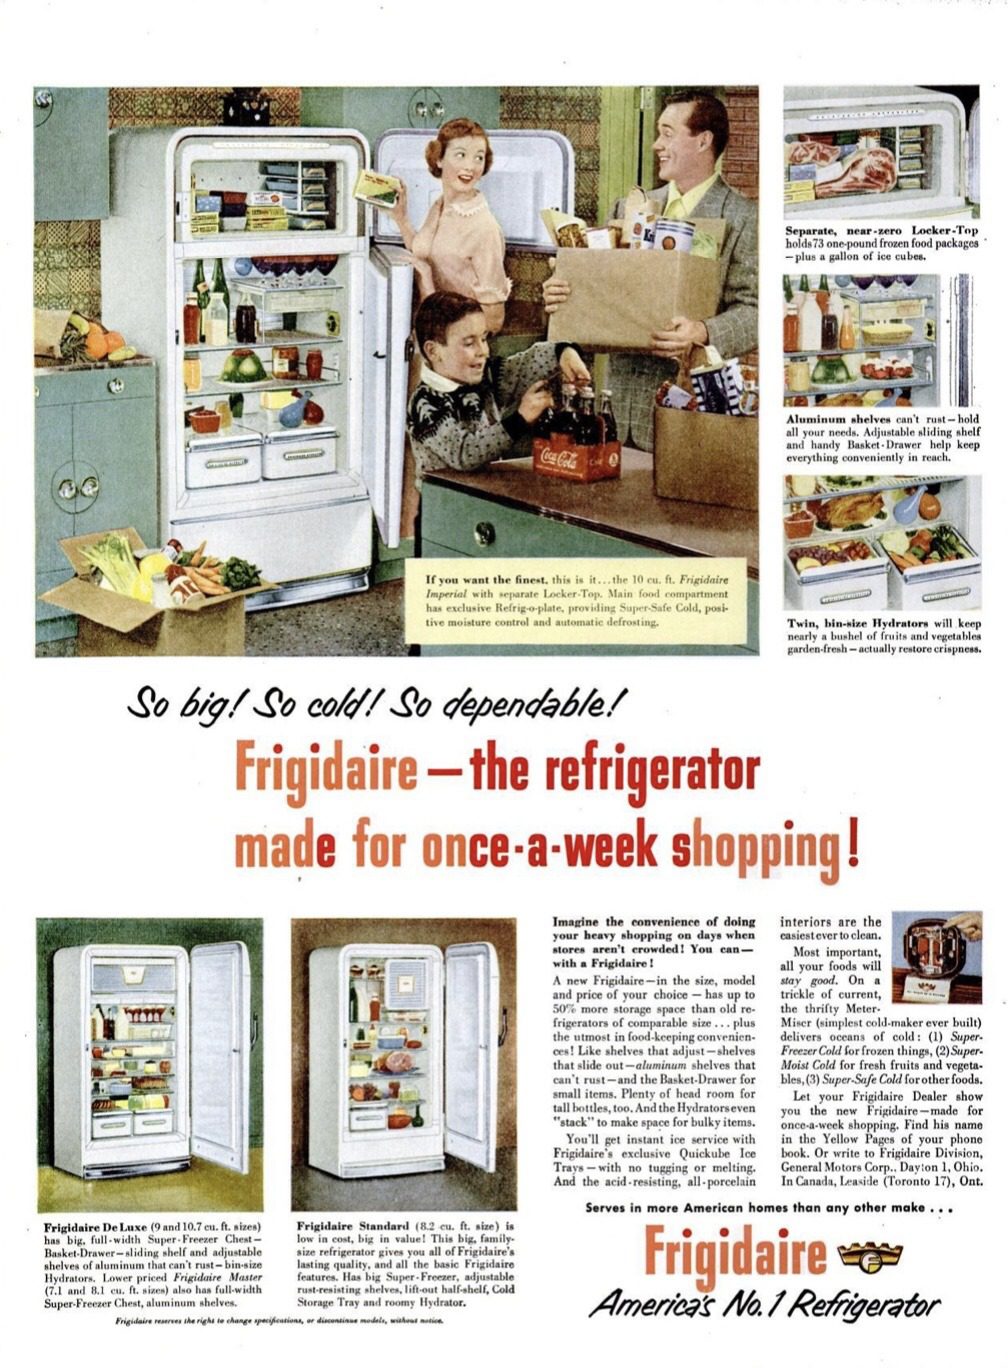 1951 Frigidaire refrigerator advertising